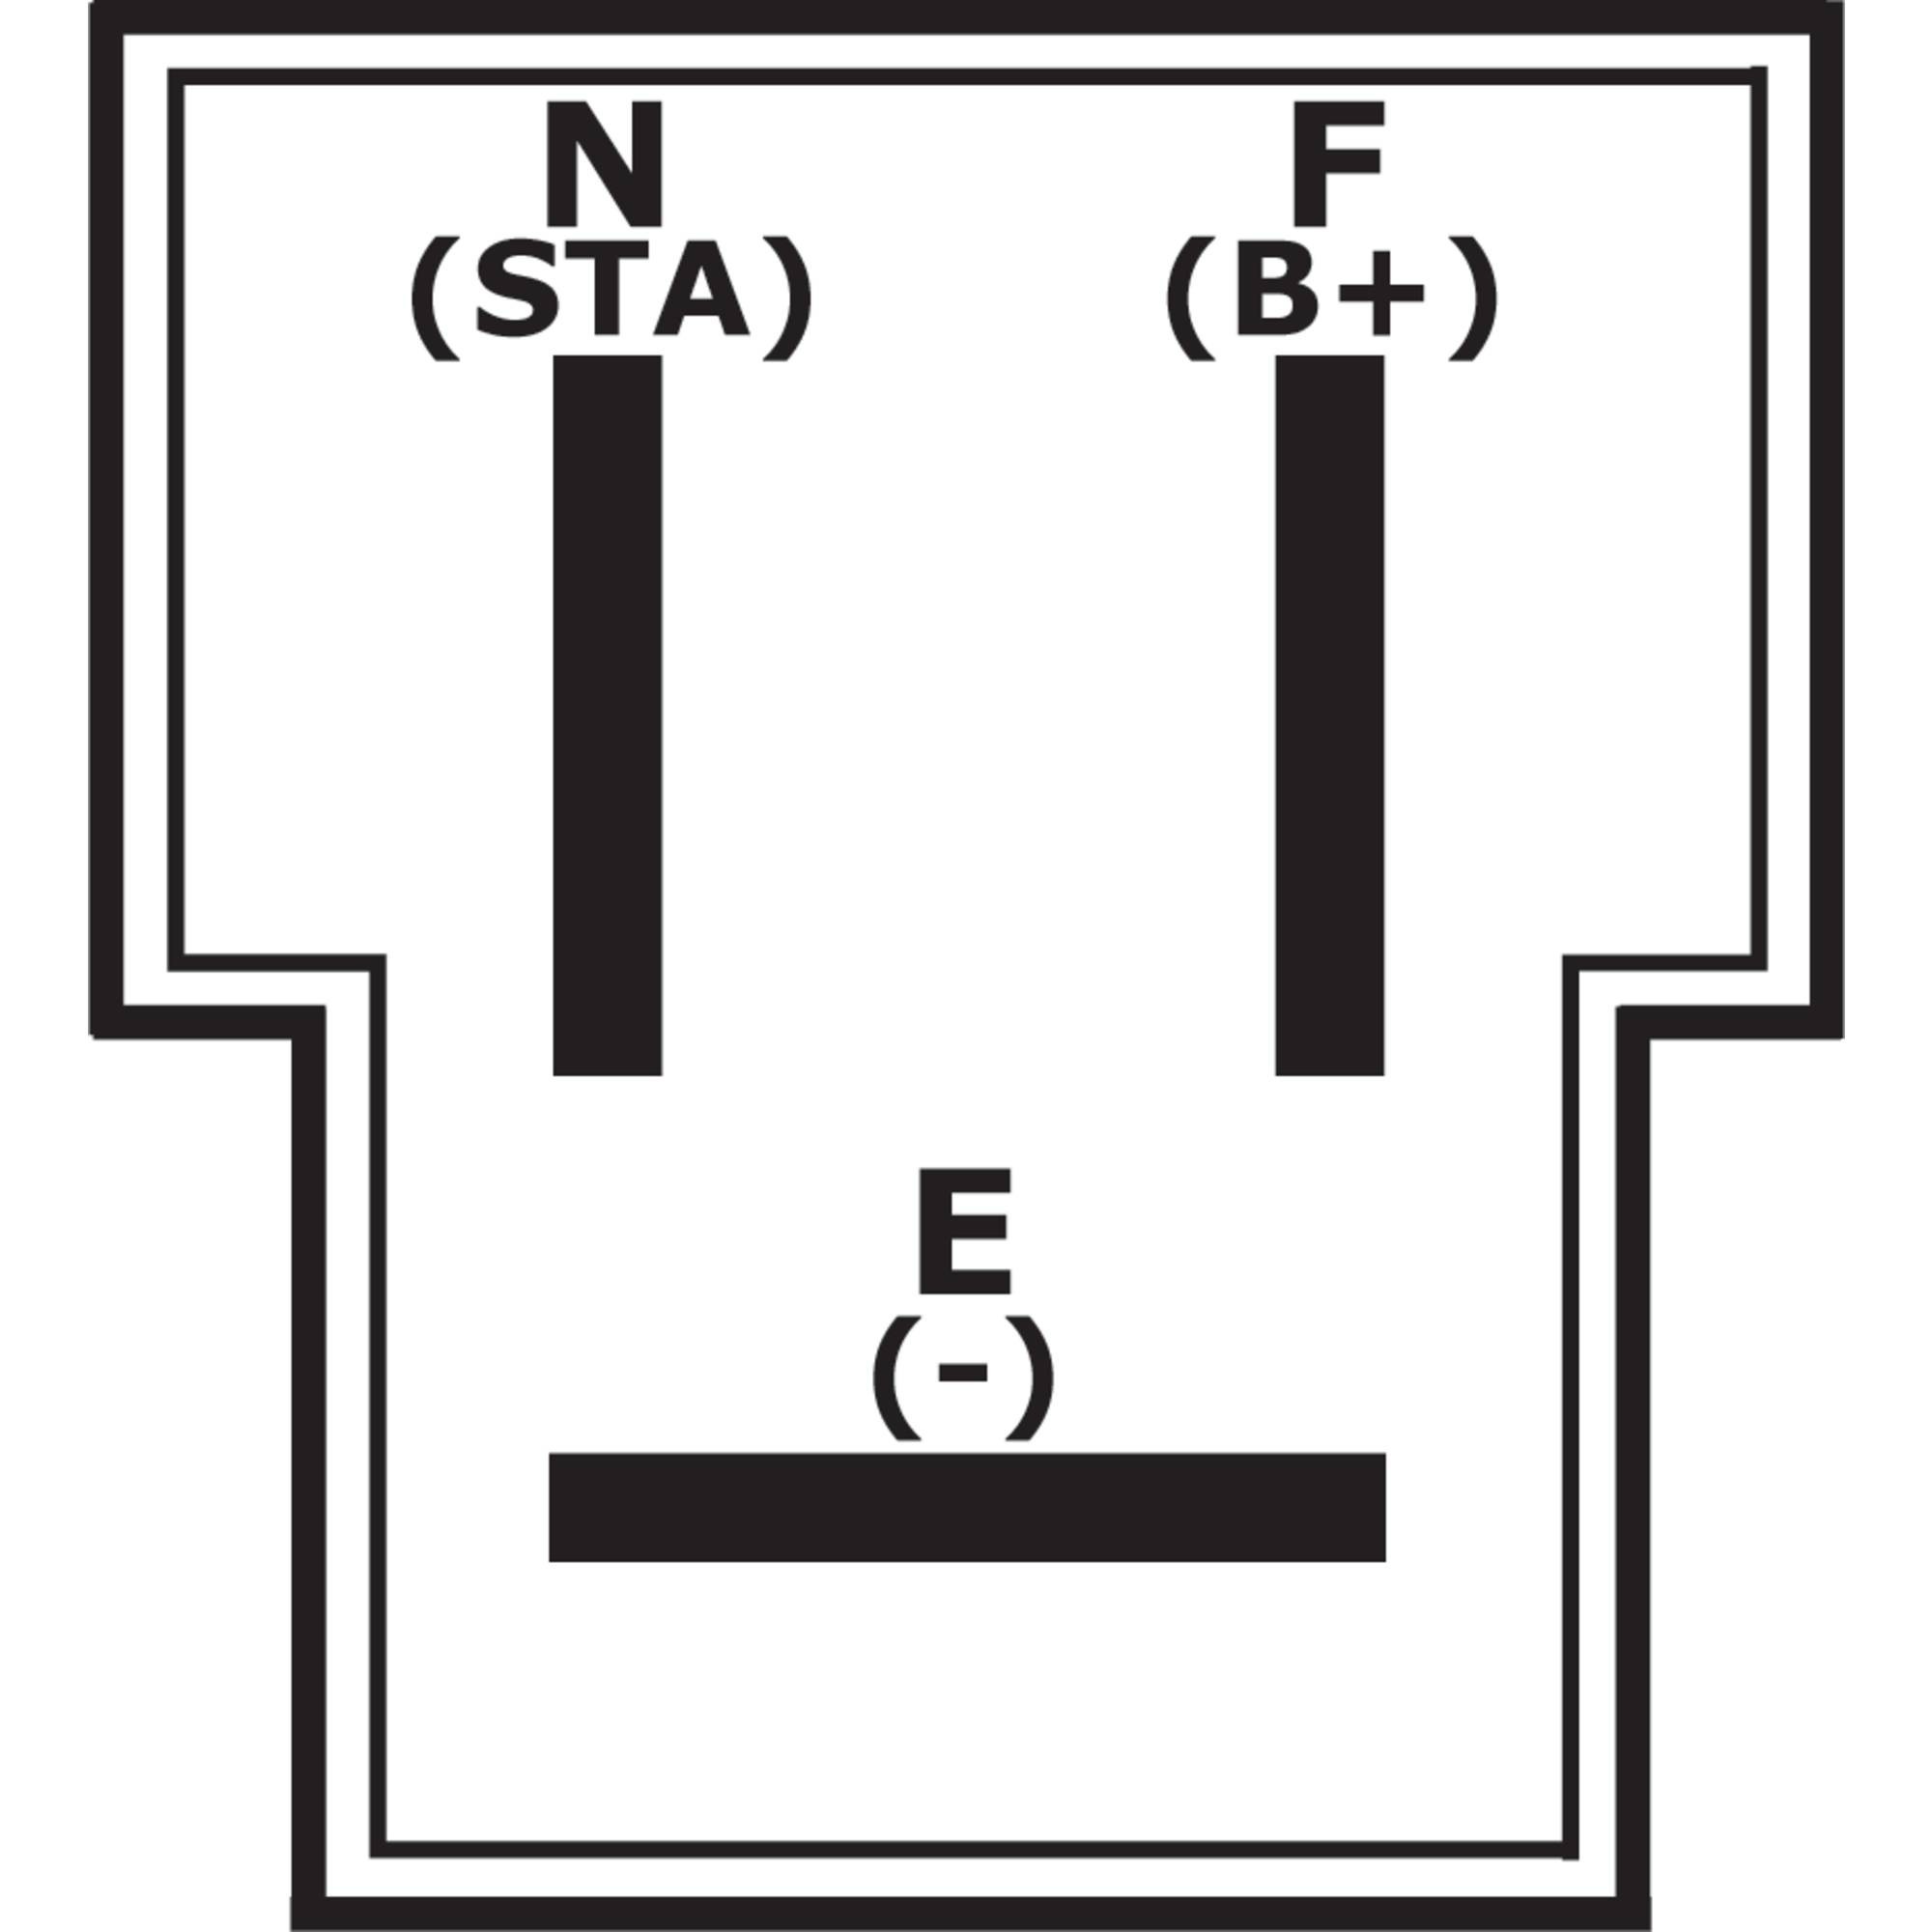 kubota alternator wiring diagram